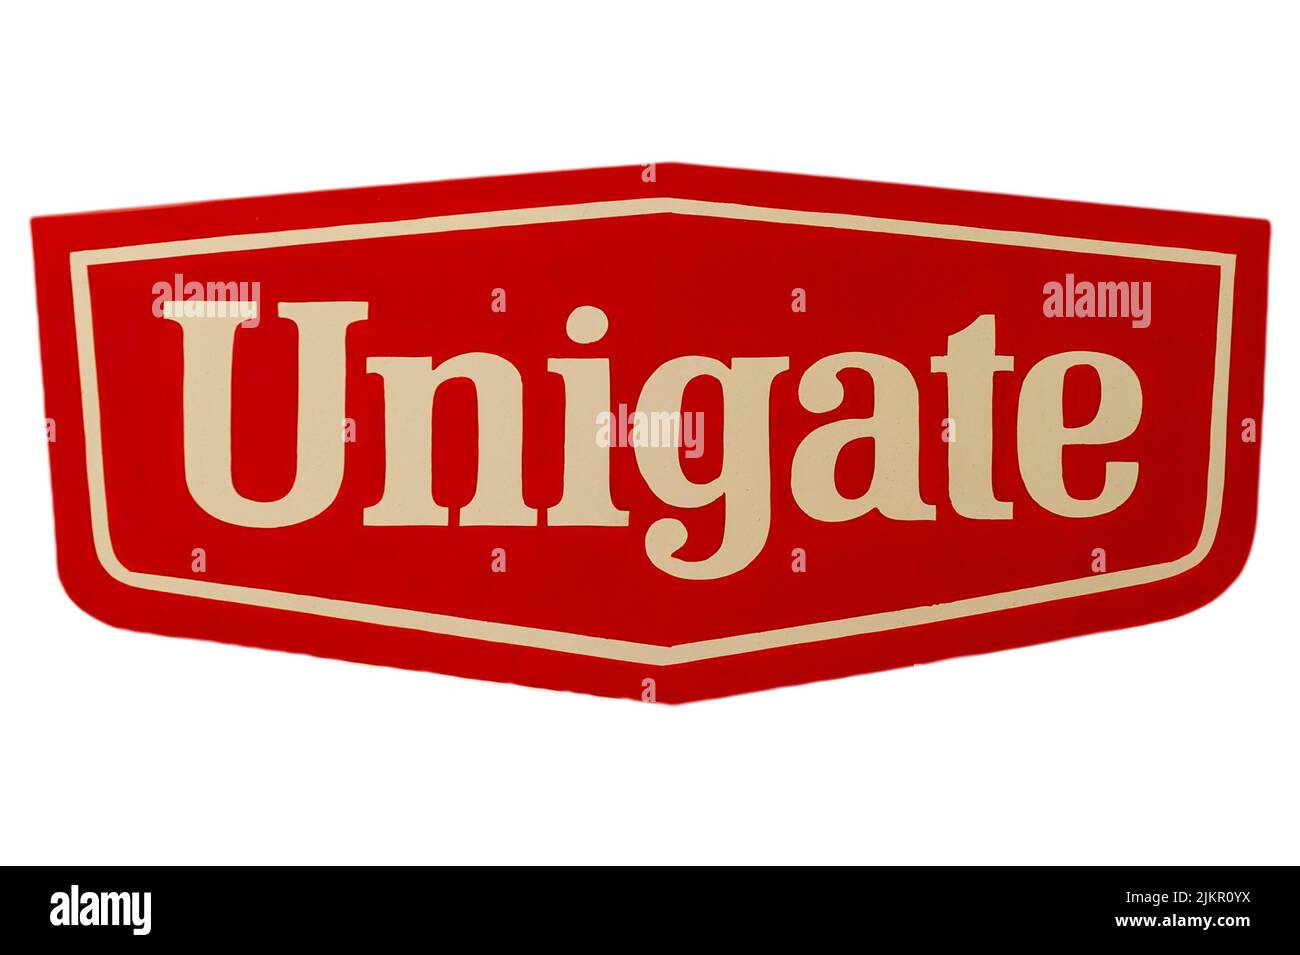 Unigate Daries Logo Stock Photo